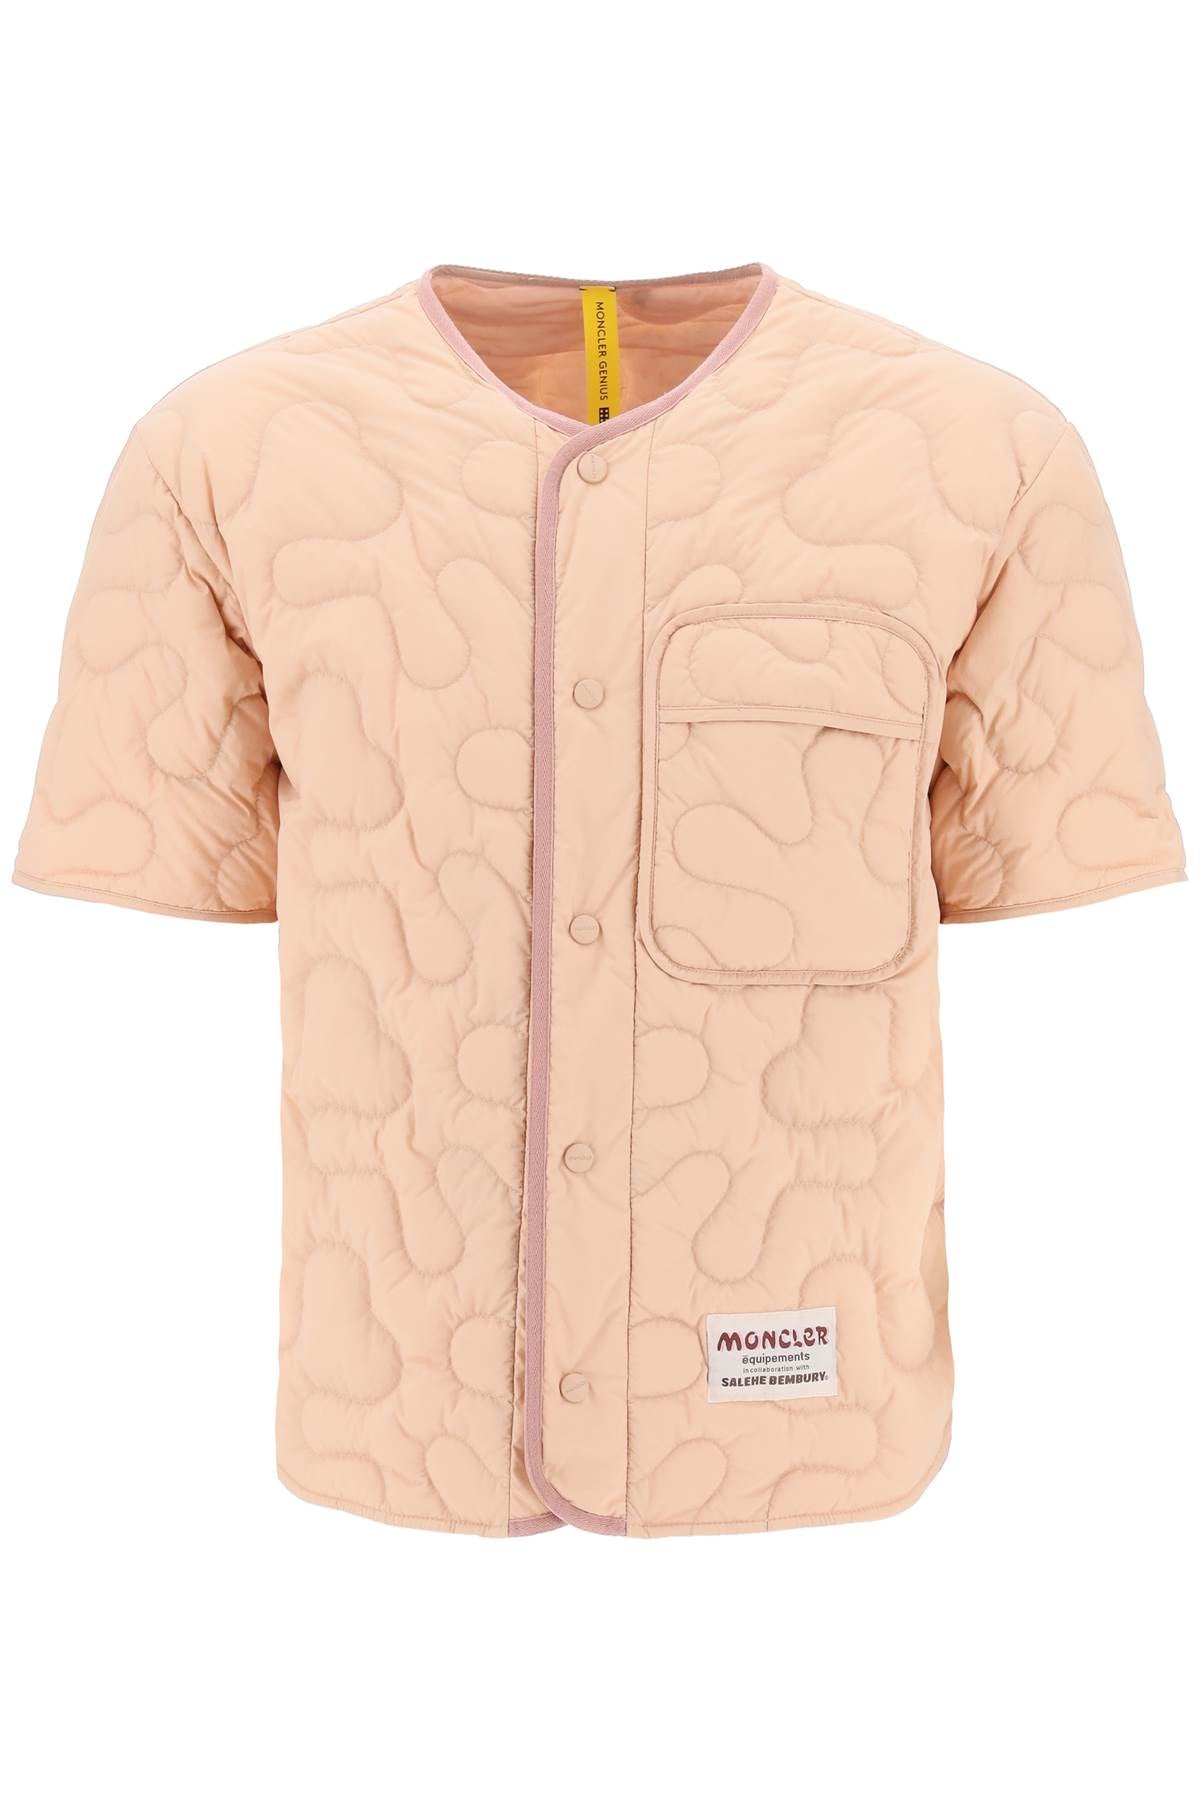 Moncler x salehe bembury short-sleeved quilted jacket 2F000 02 M3224 LIGHT PINK